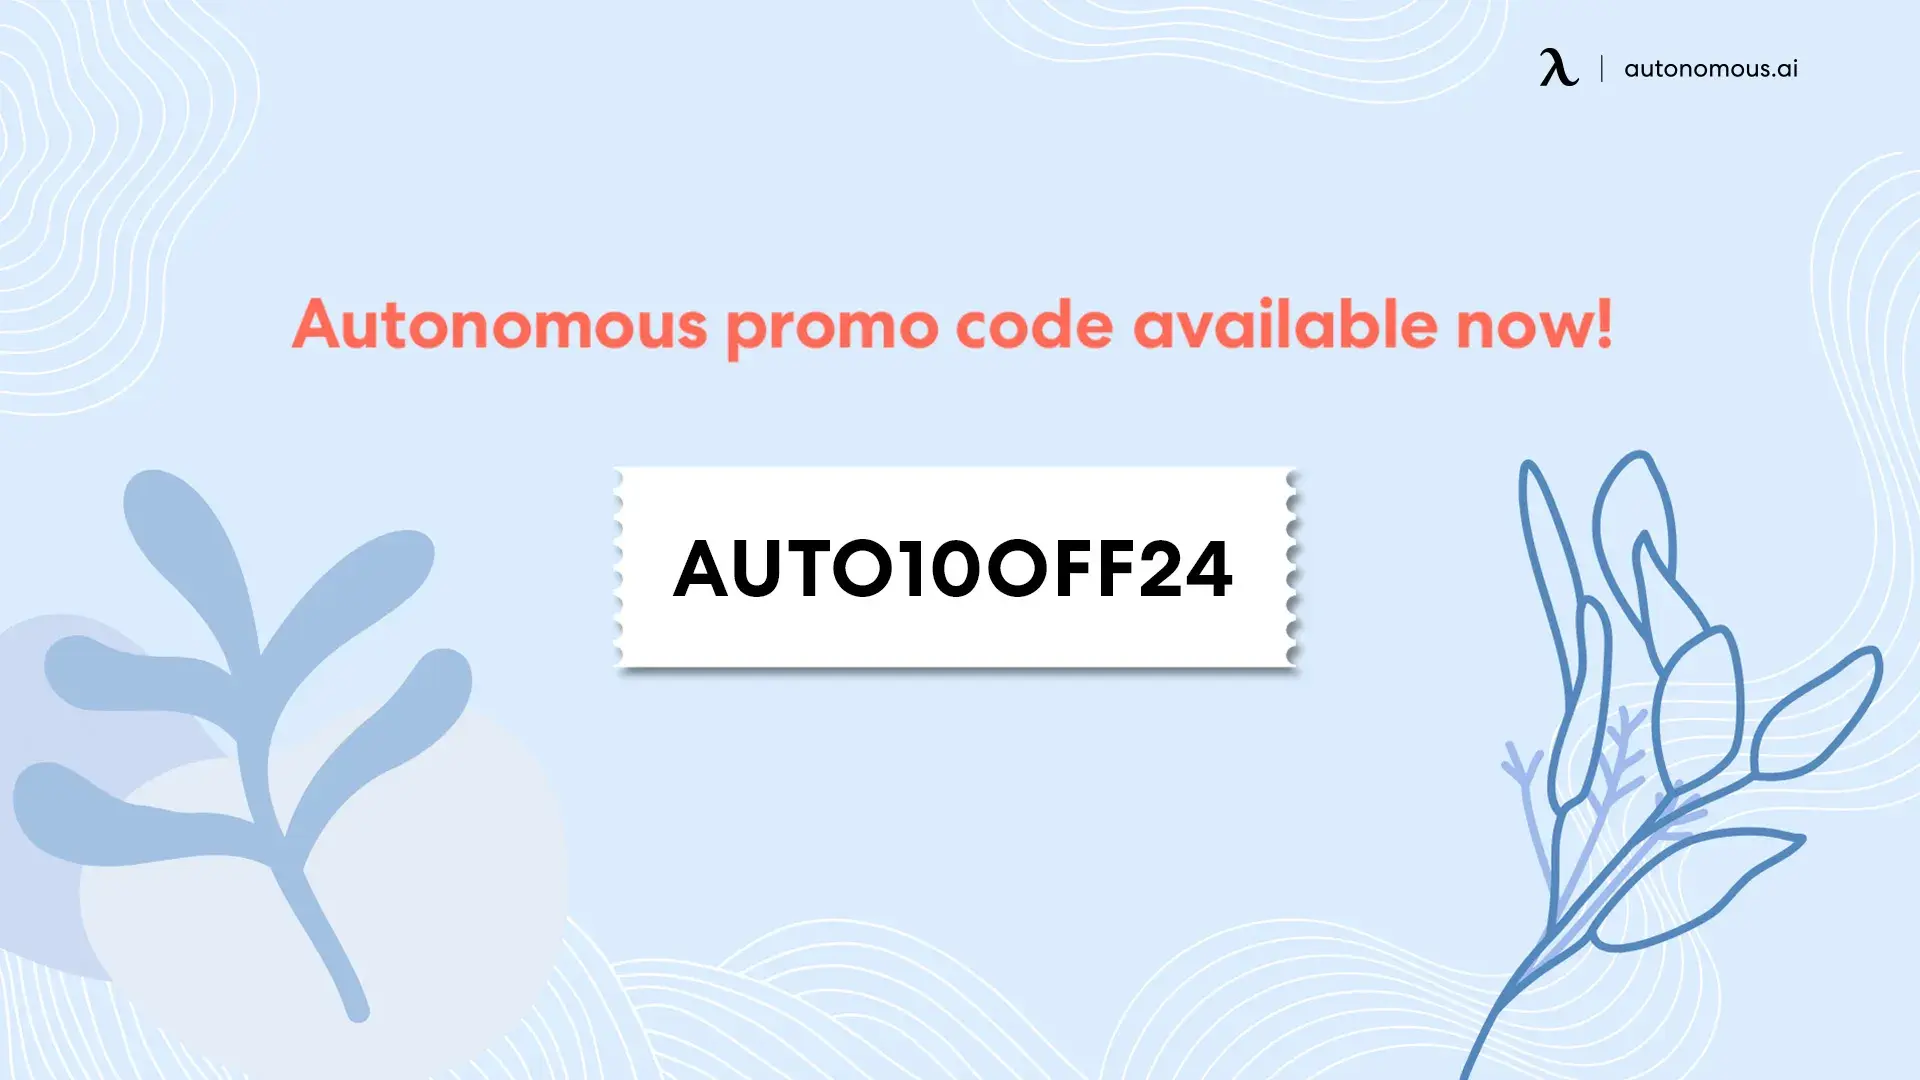 Autonomous Coupons Code 10% - Promo Code - Discount Code